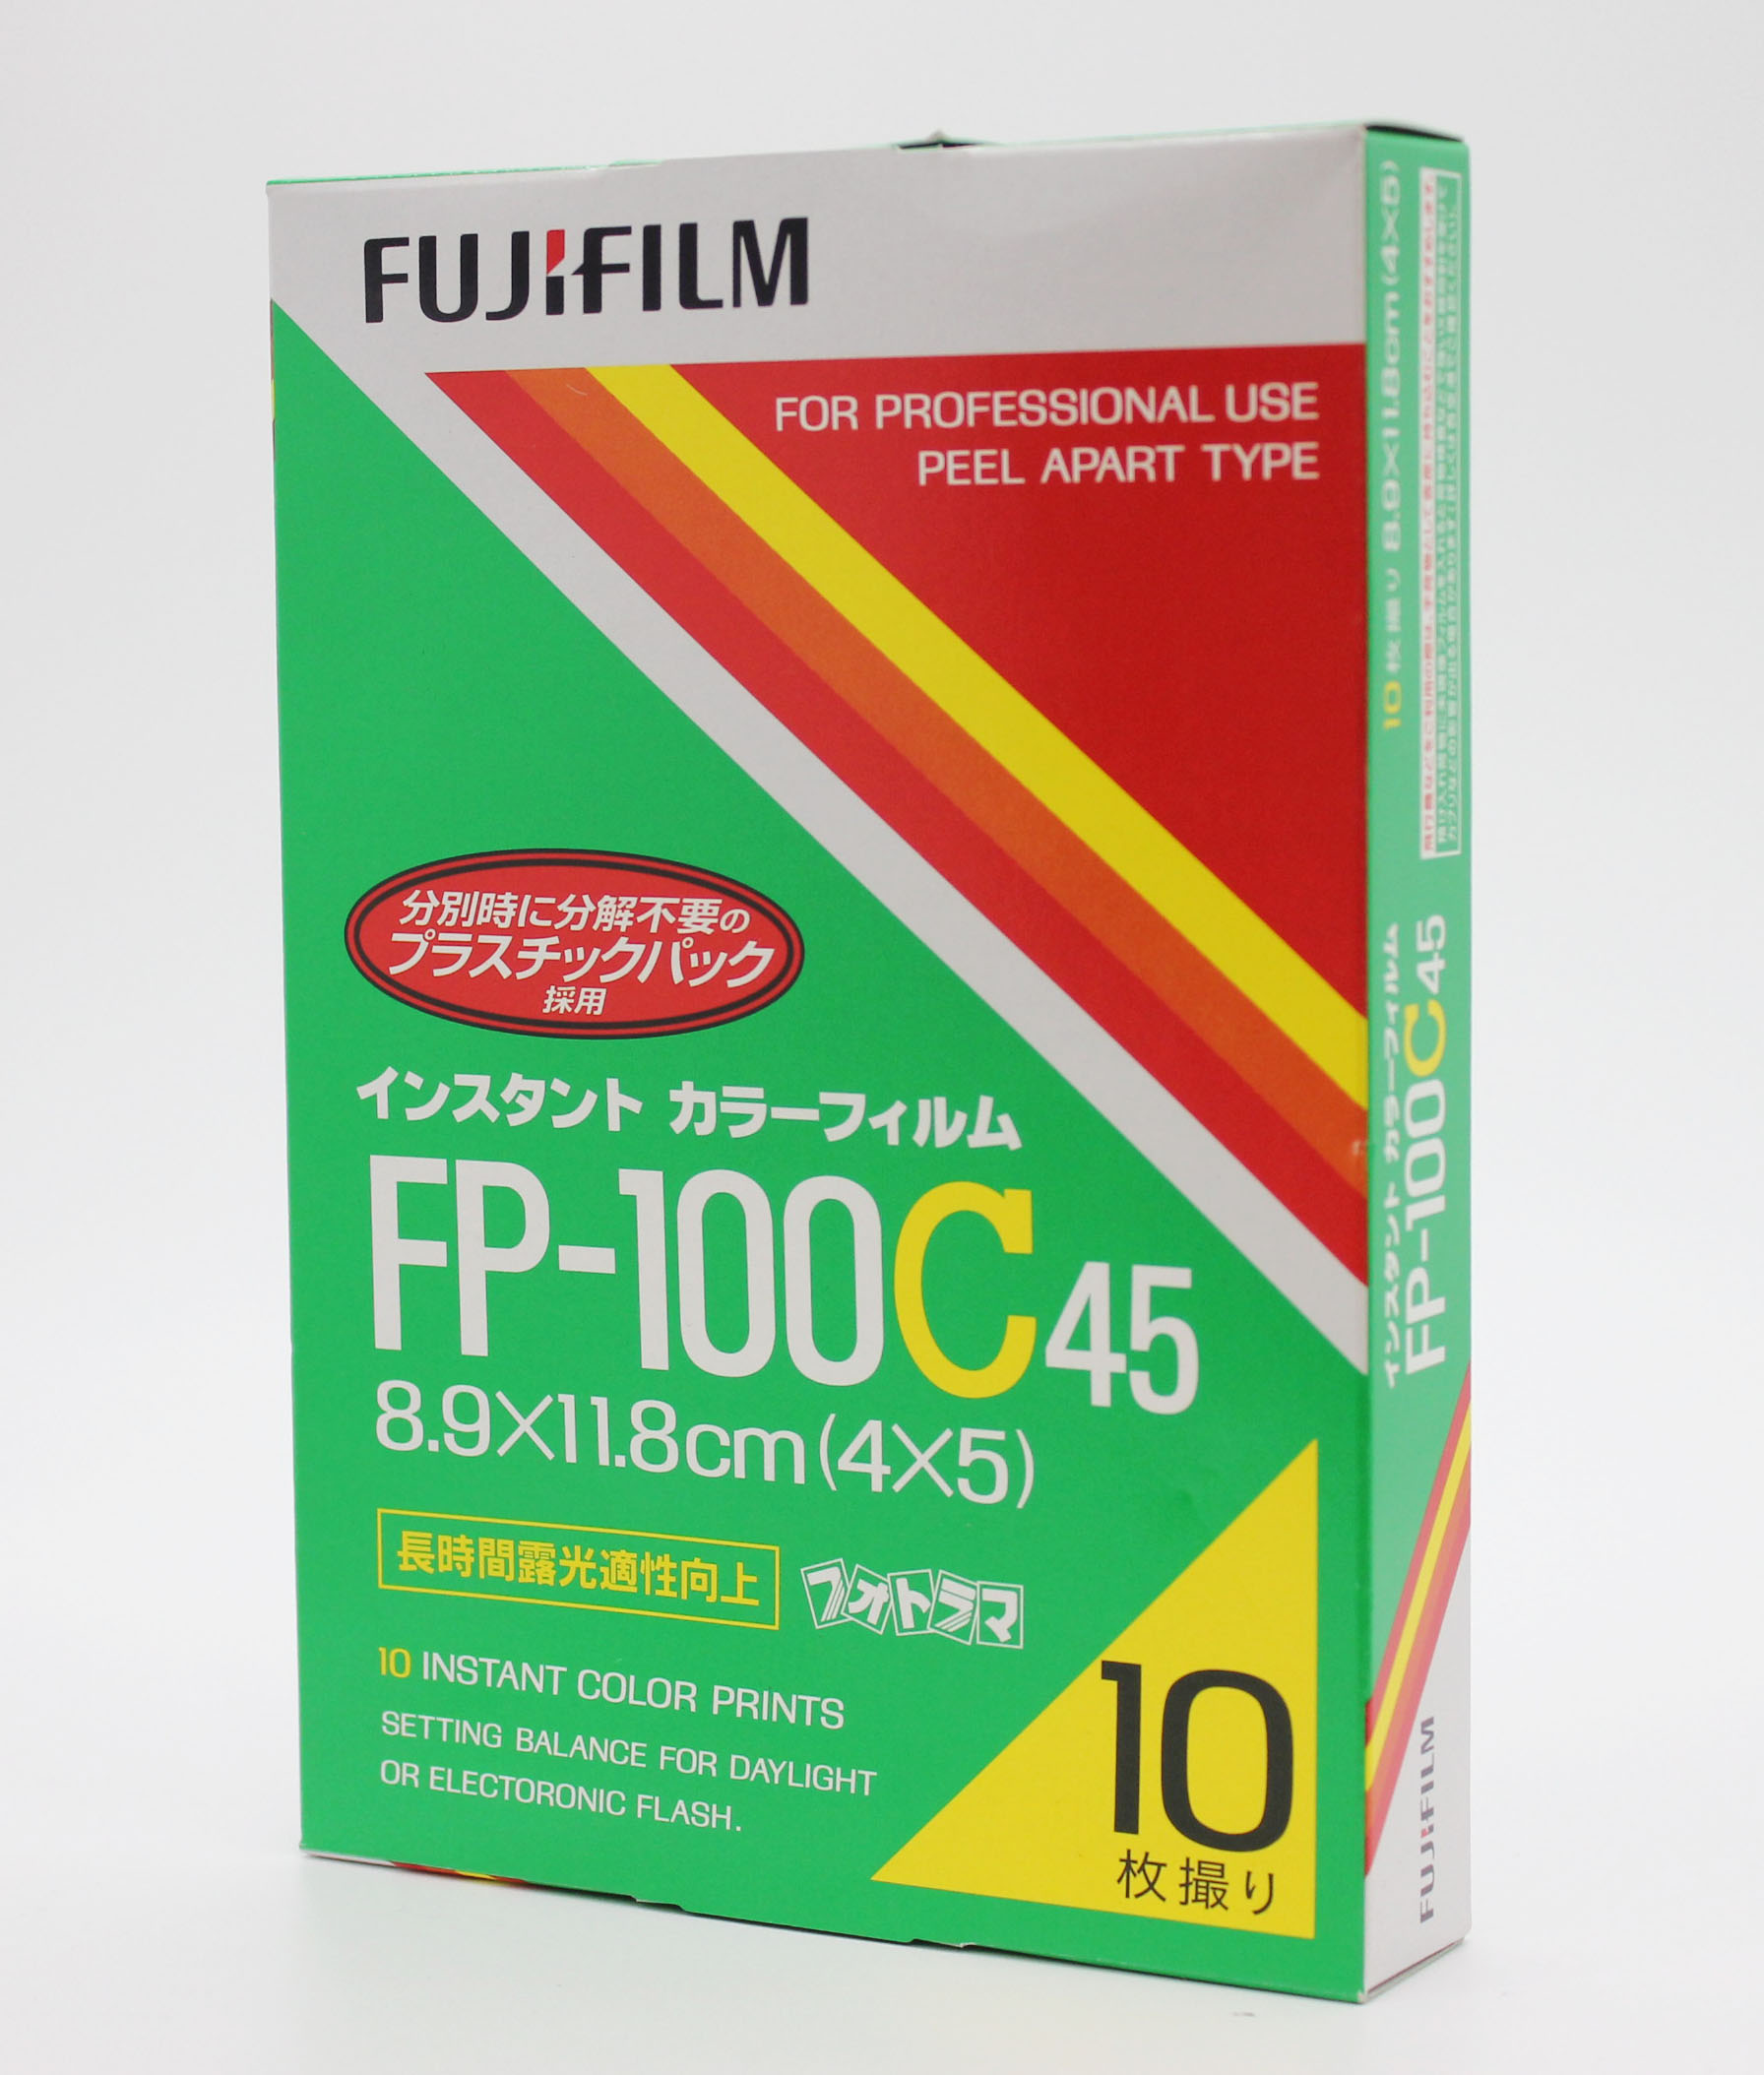 Japan Used Camera Shop | [New] Fuji Fujifilm FP-100C45 4x5 8.9x11.8cm Instant Color Film (EXP 10/2009)